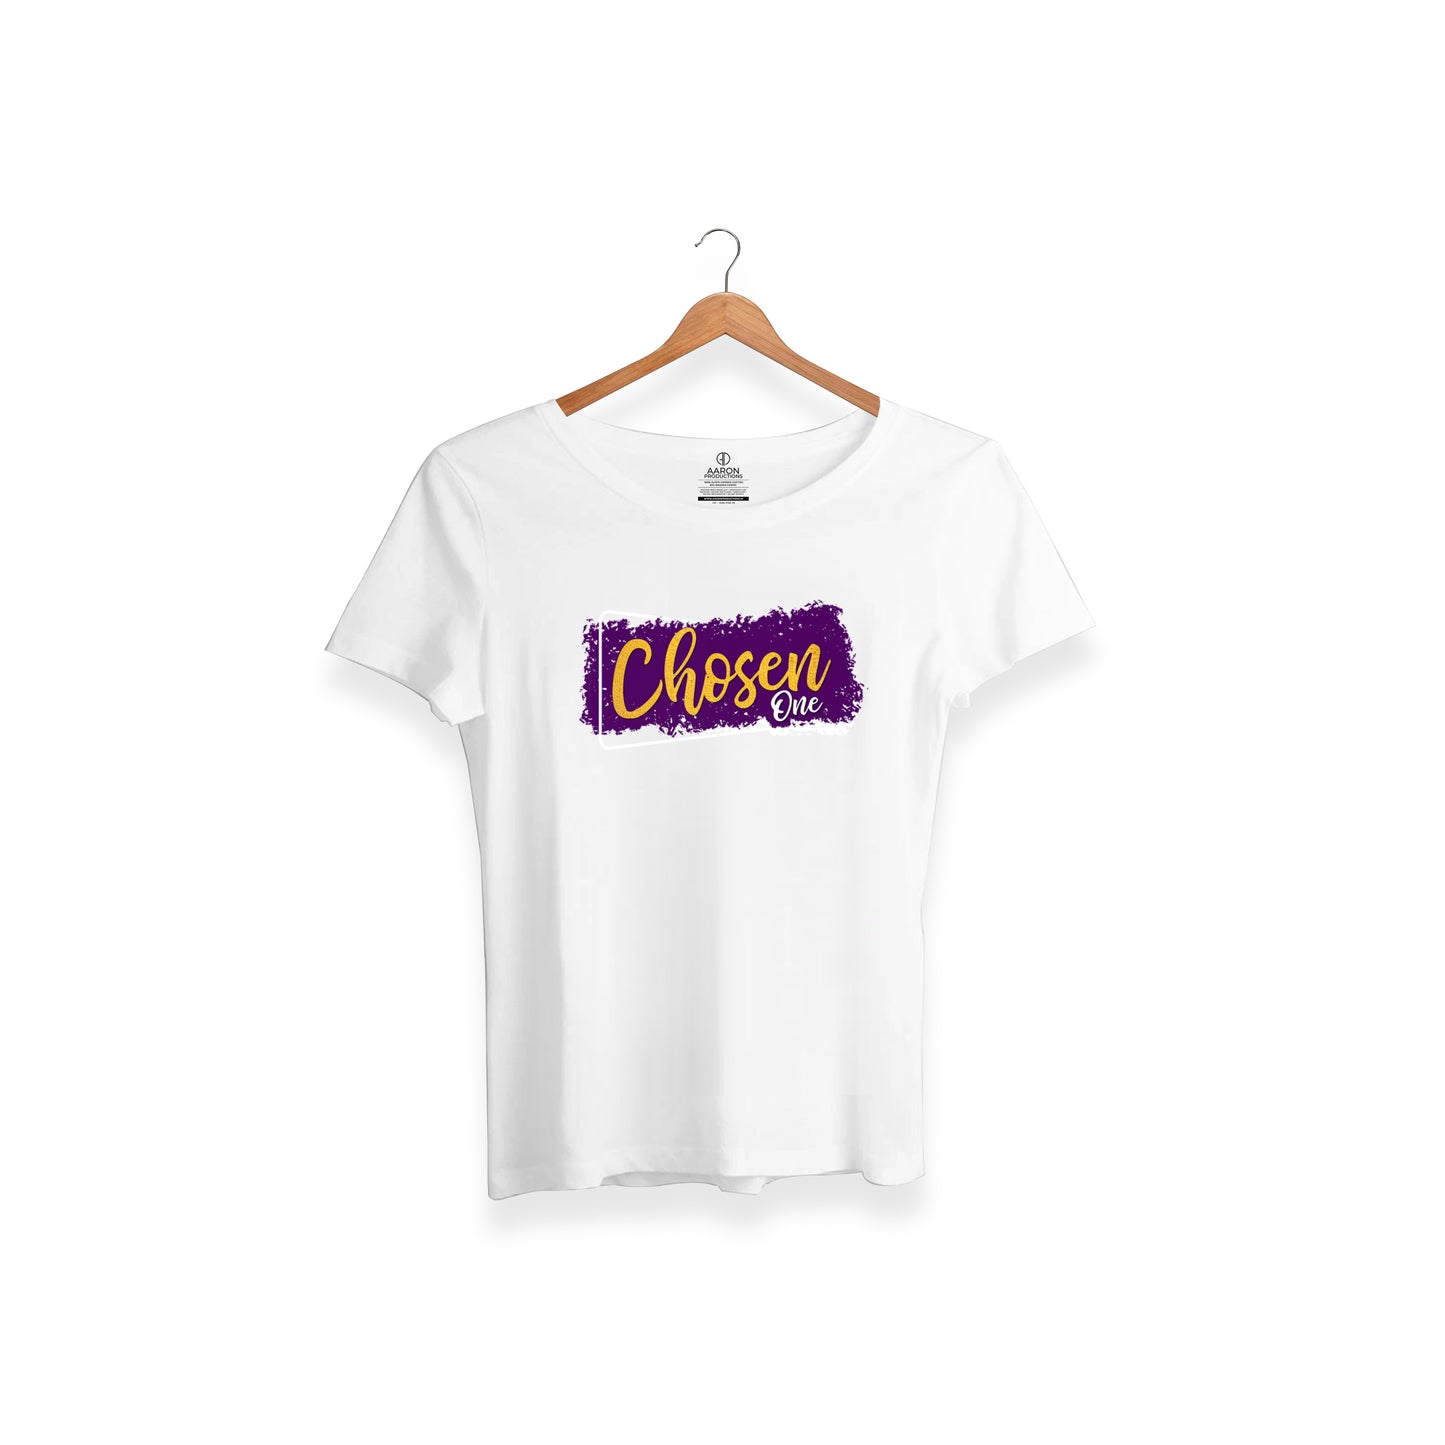 Chosen One - Girls T-shirts